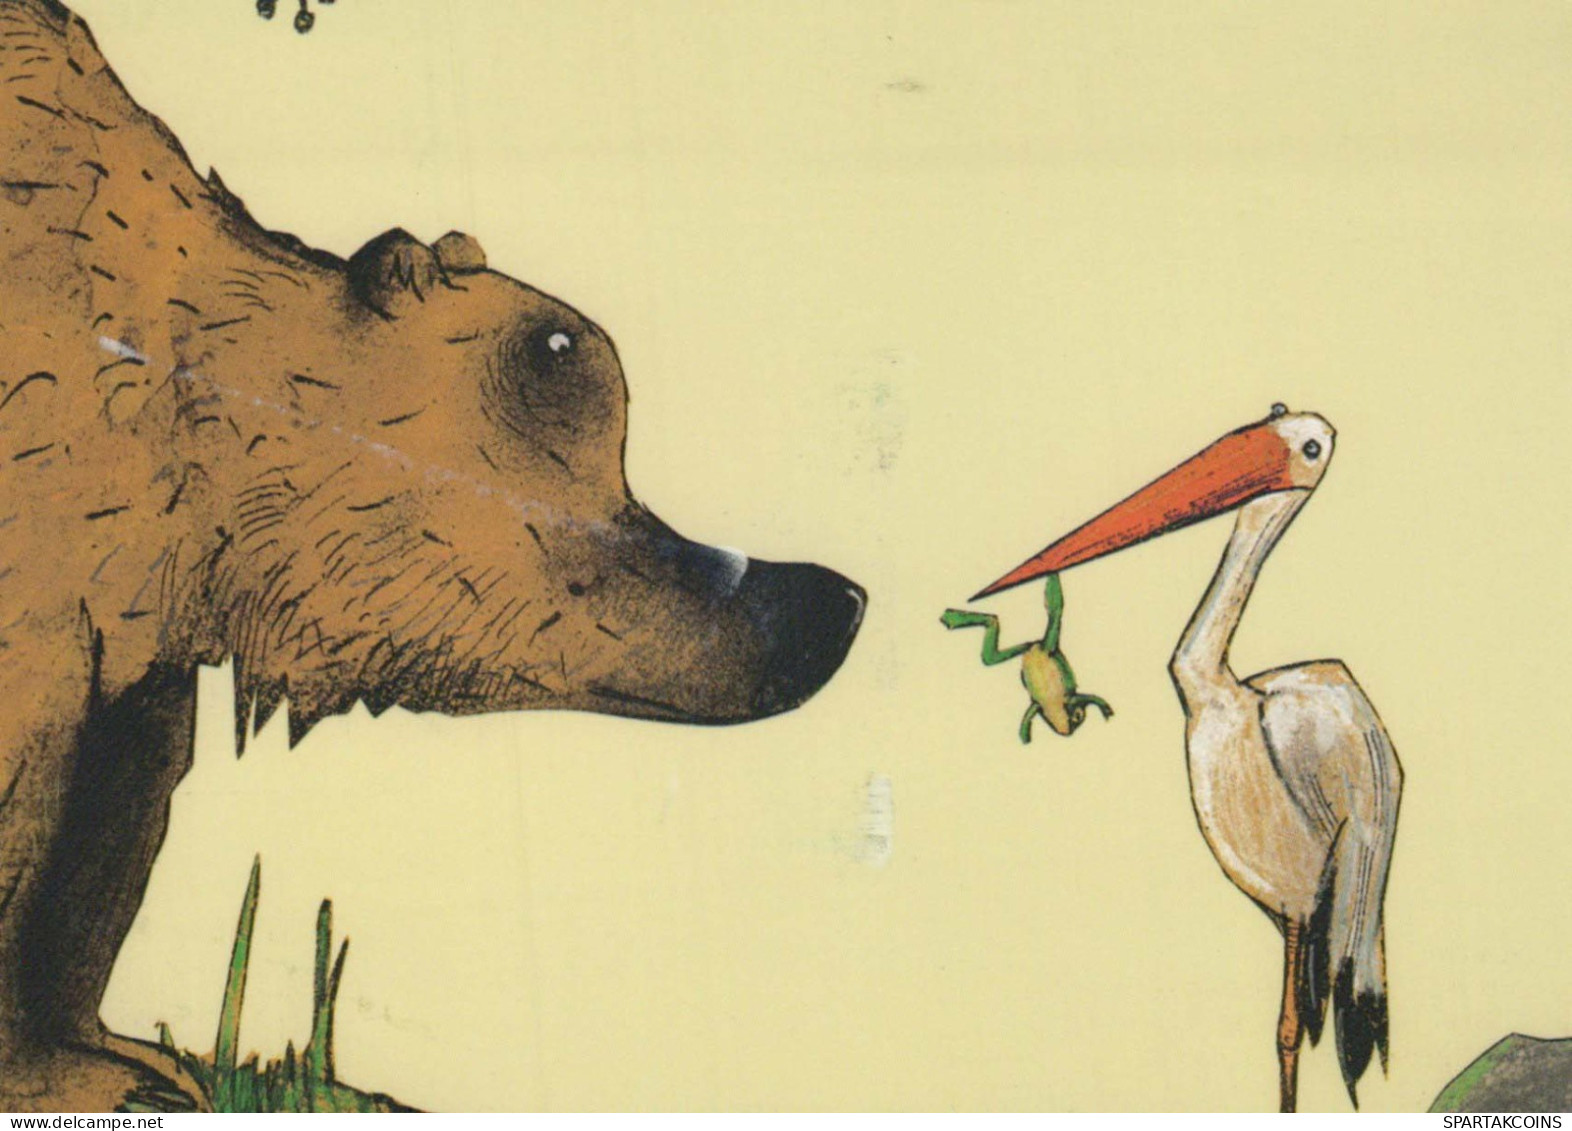 NASCERE Animale Vintage Cartolina CPSM #PBS102.A - Osos